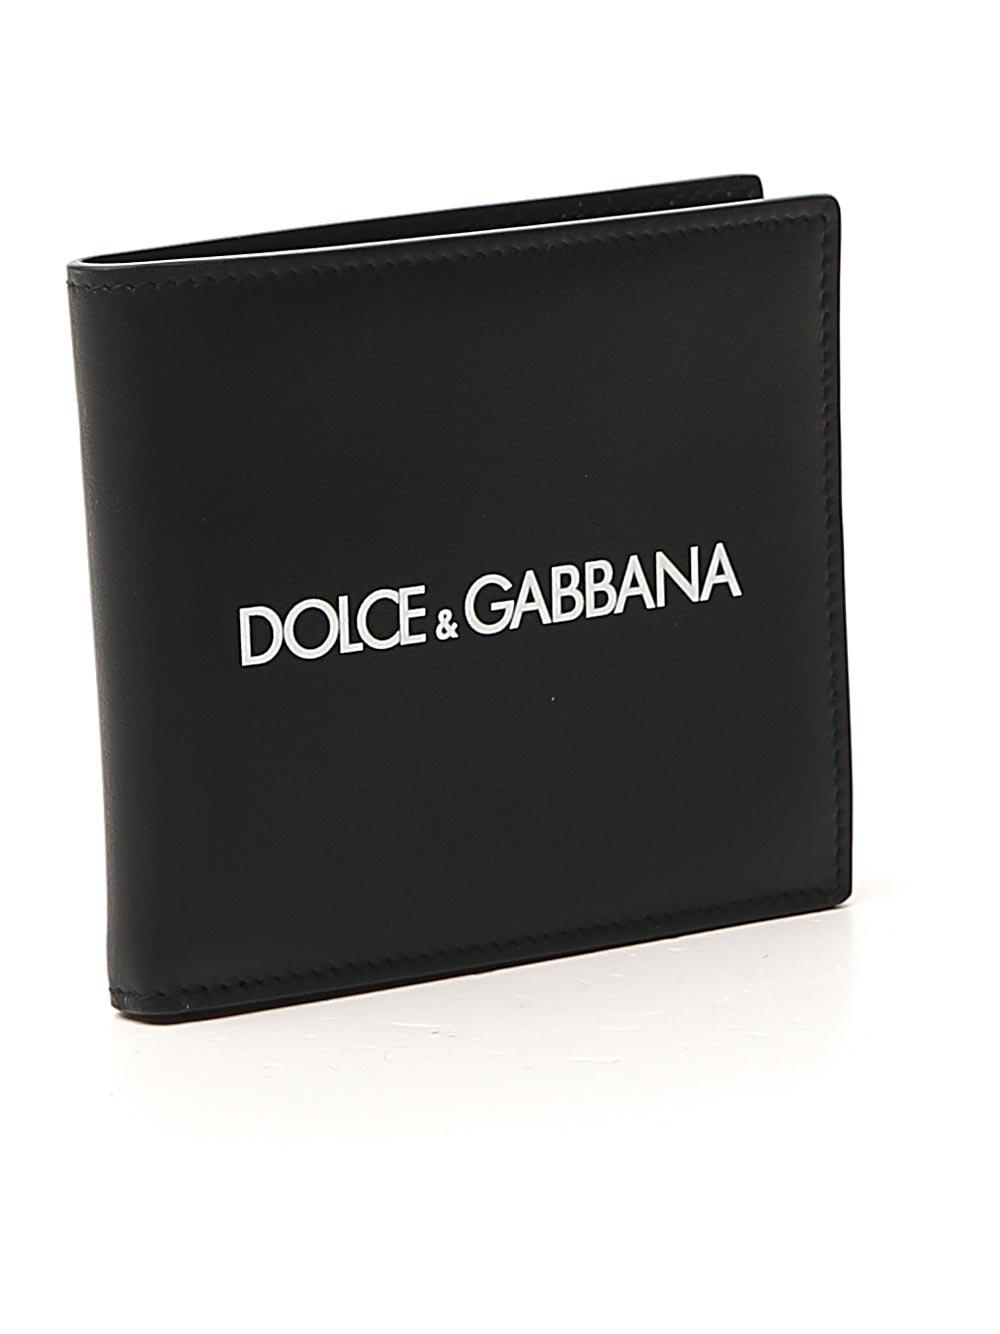 Dolce & Gabbana Black Logoed Bifold Wallet for Men - Save 24% - Lyst